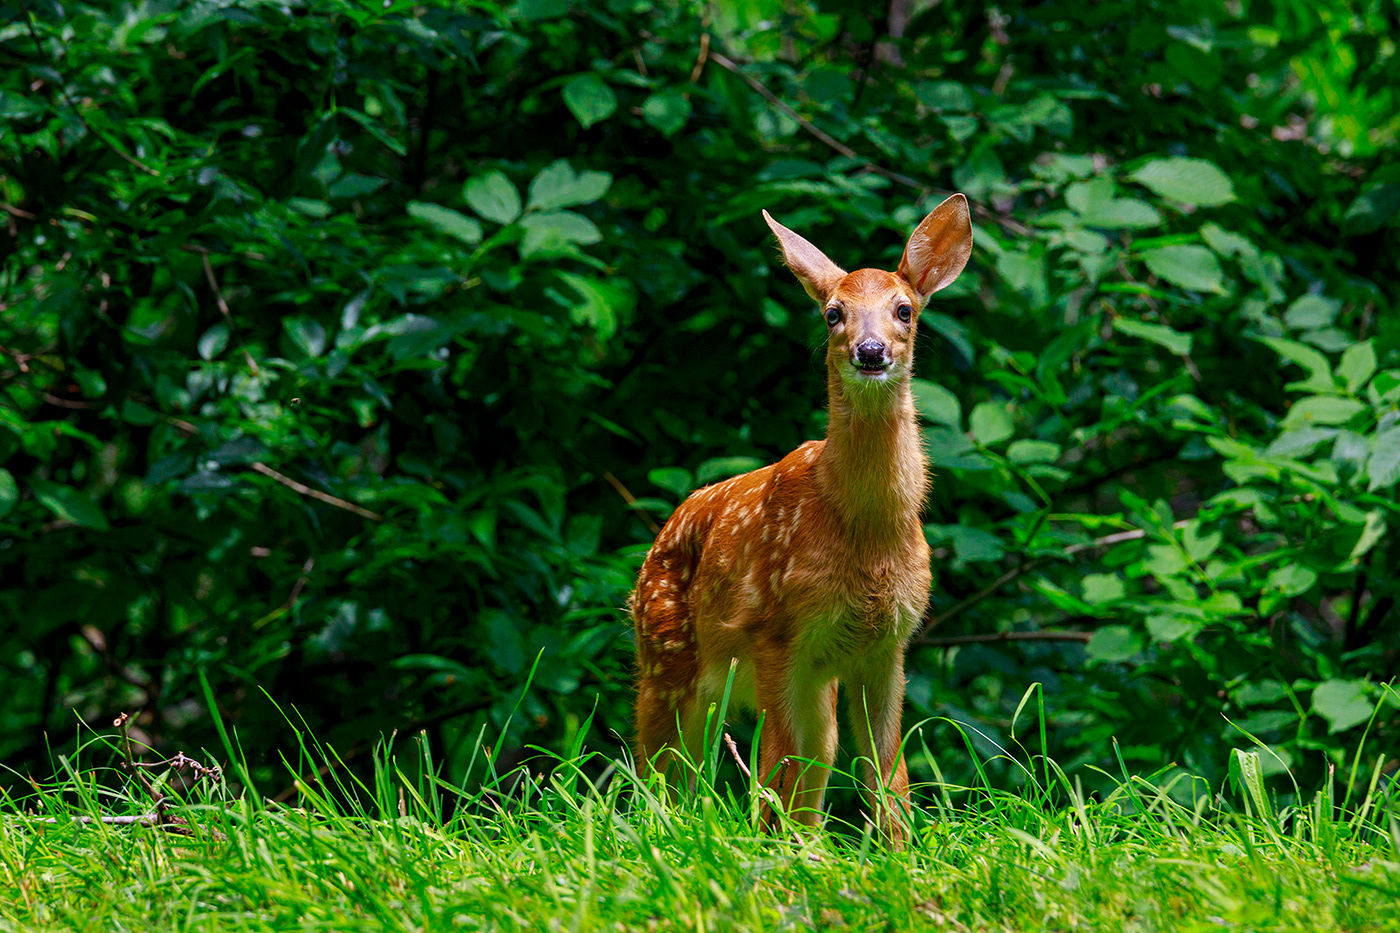 bashful Big Ears cute deer fawn pretty white spots Pennsylvania Pittsburgh schenley park